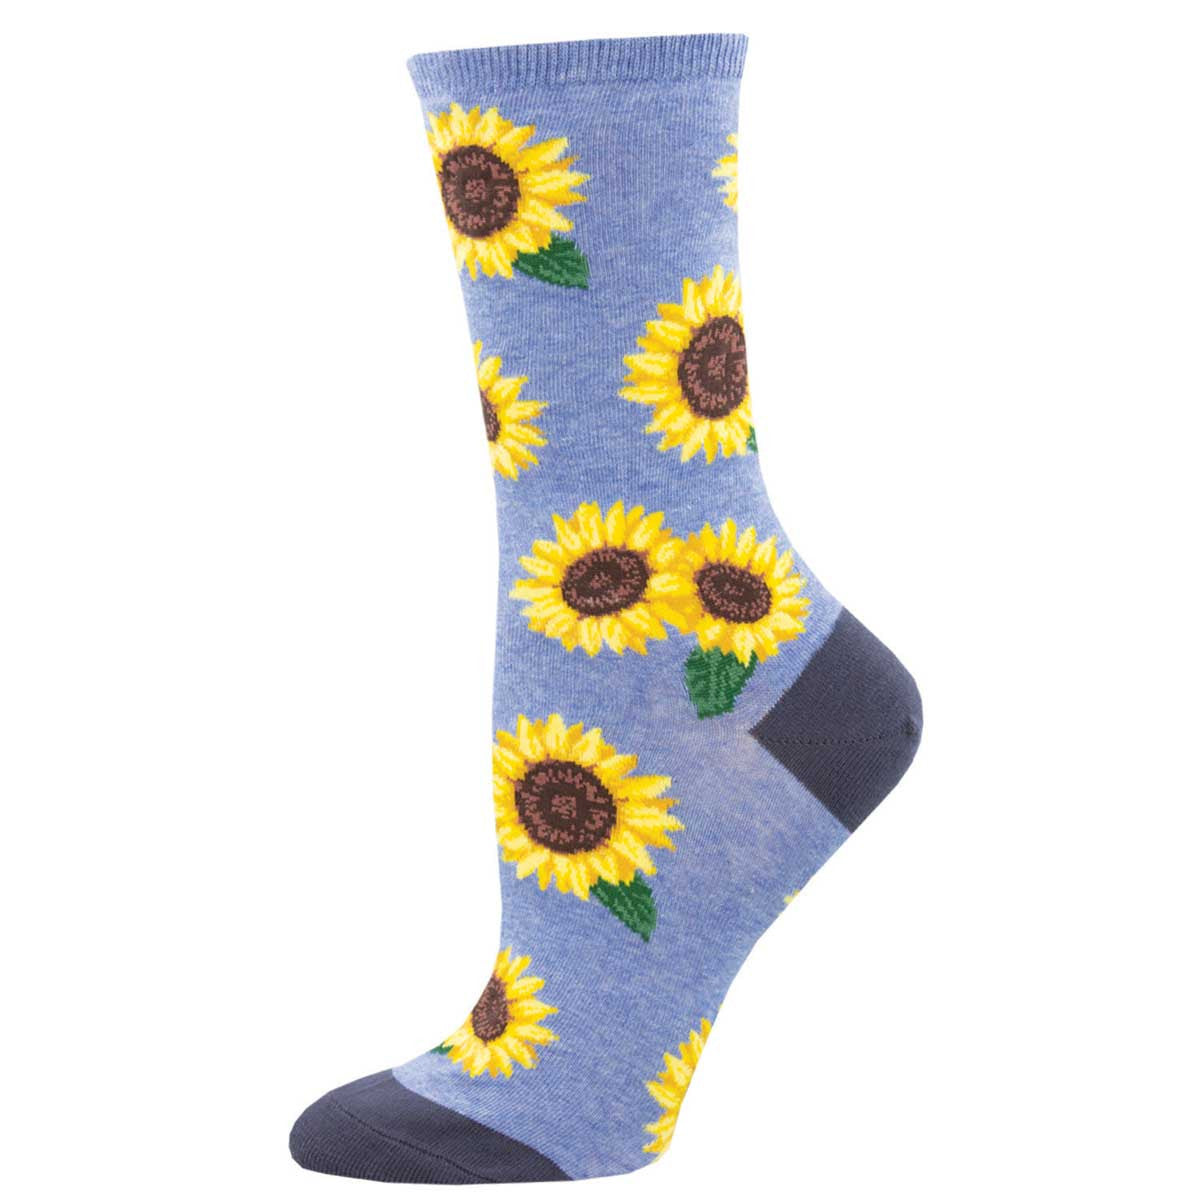 More Blooming Socks Sunflowers